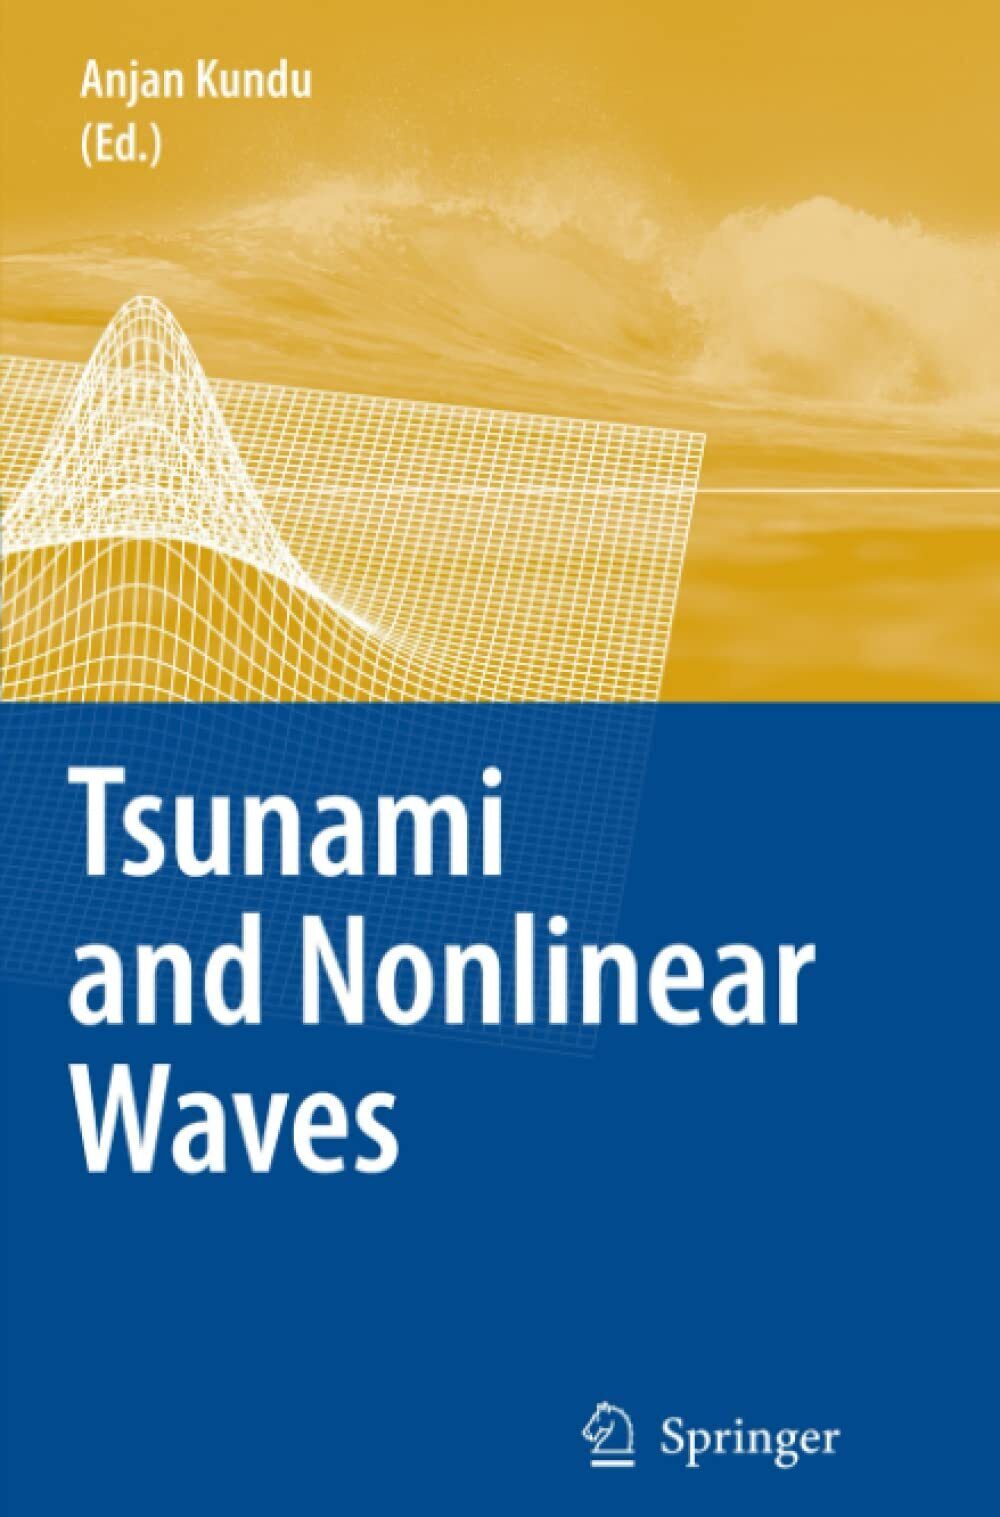 Tsunami and Nonlinear Waves - Kundu - Springer, 2010